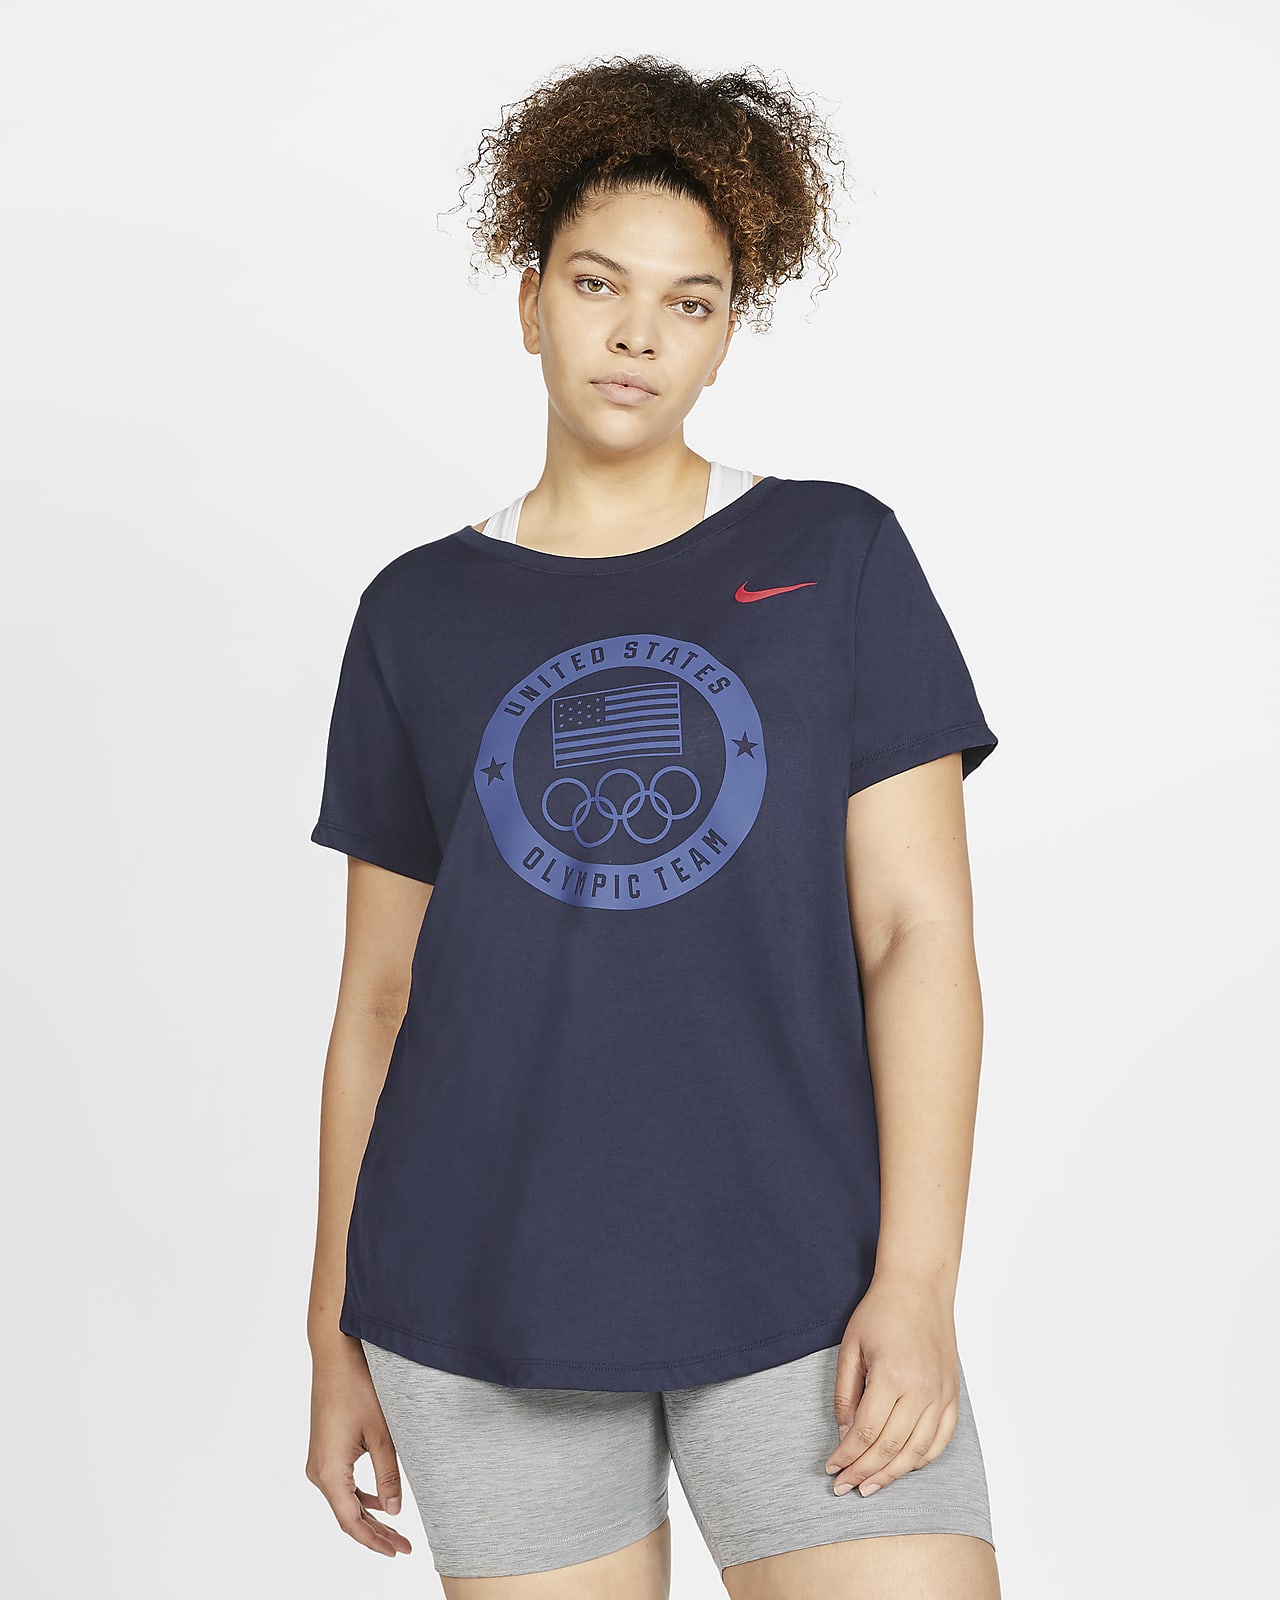 Nike Team USA Women's Training T-Shirt (Plus Size). Nike.com